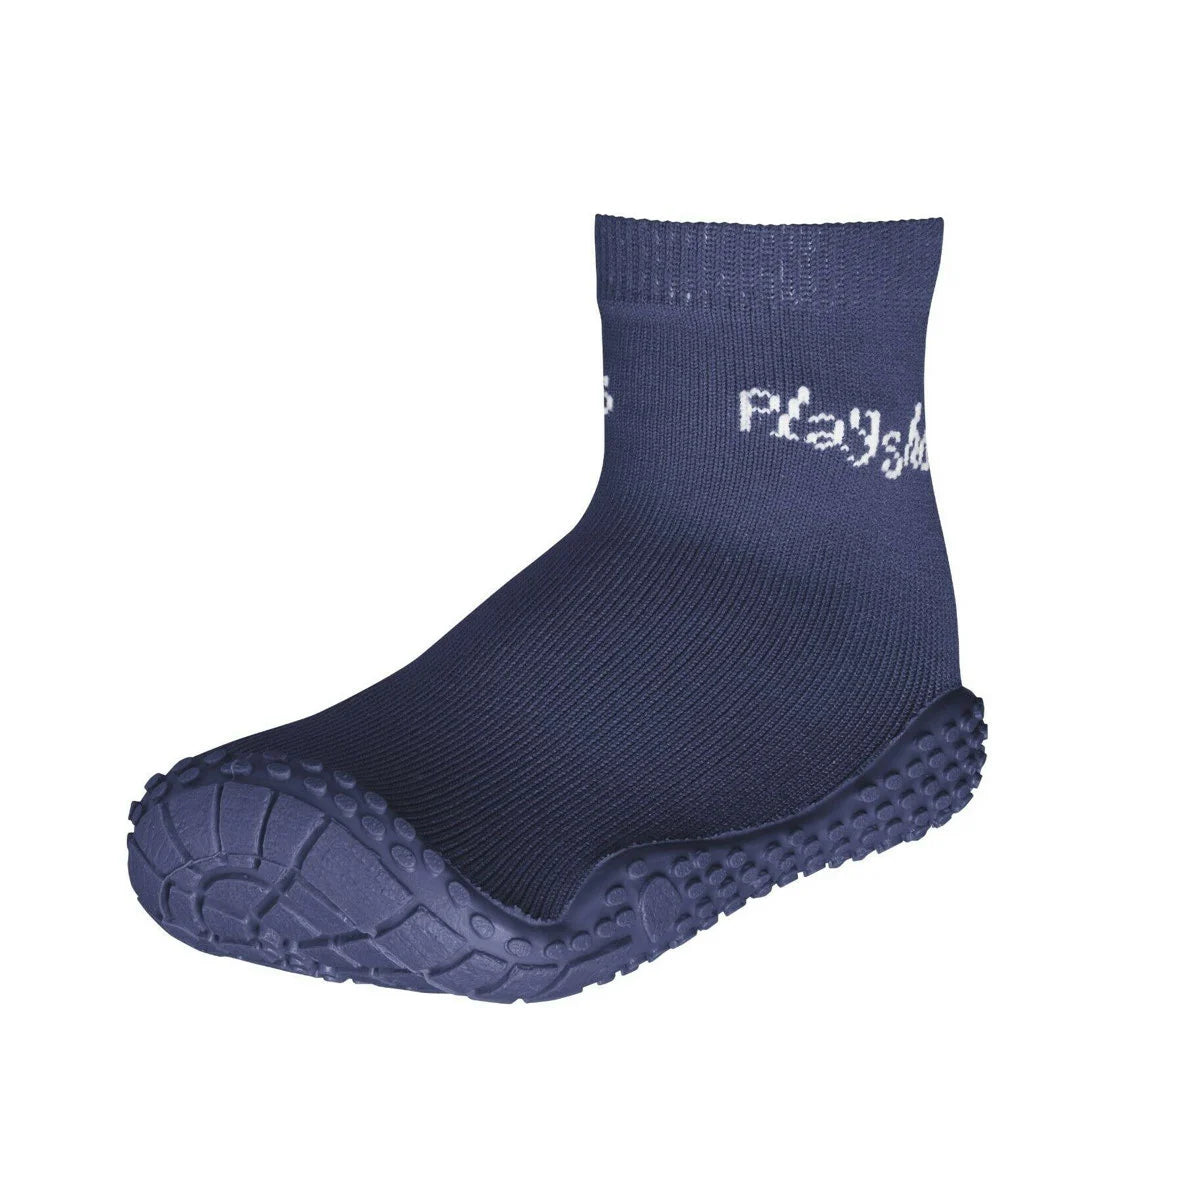 Aqua Socken für Kinder blau